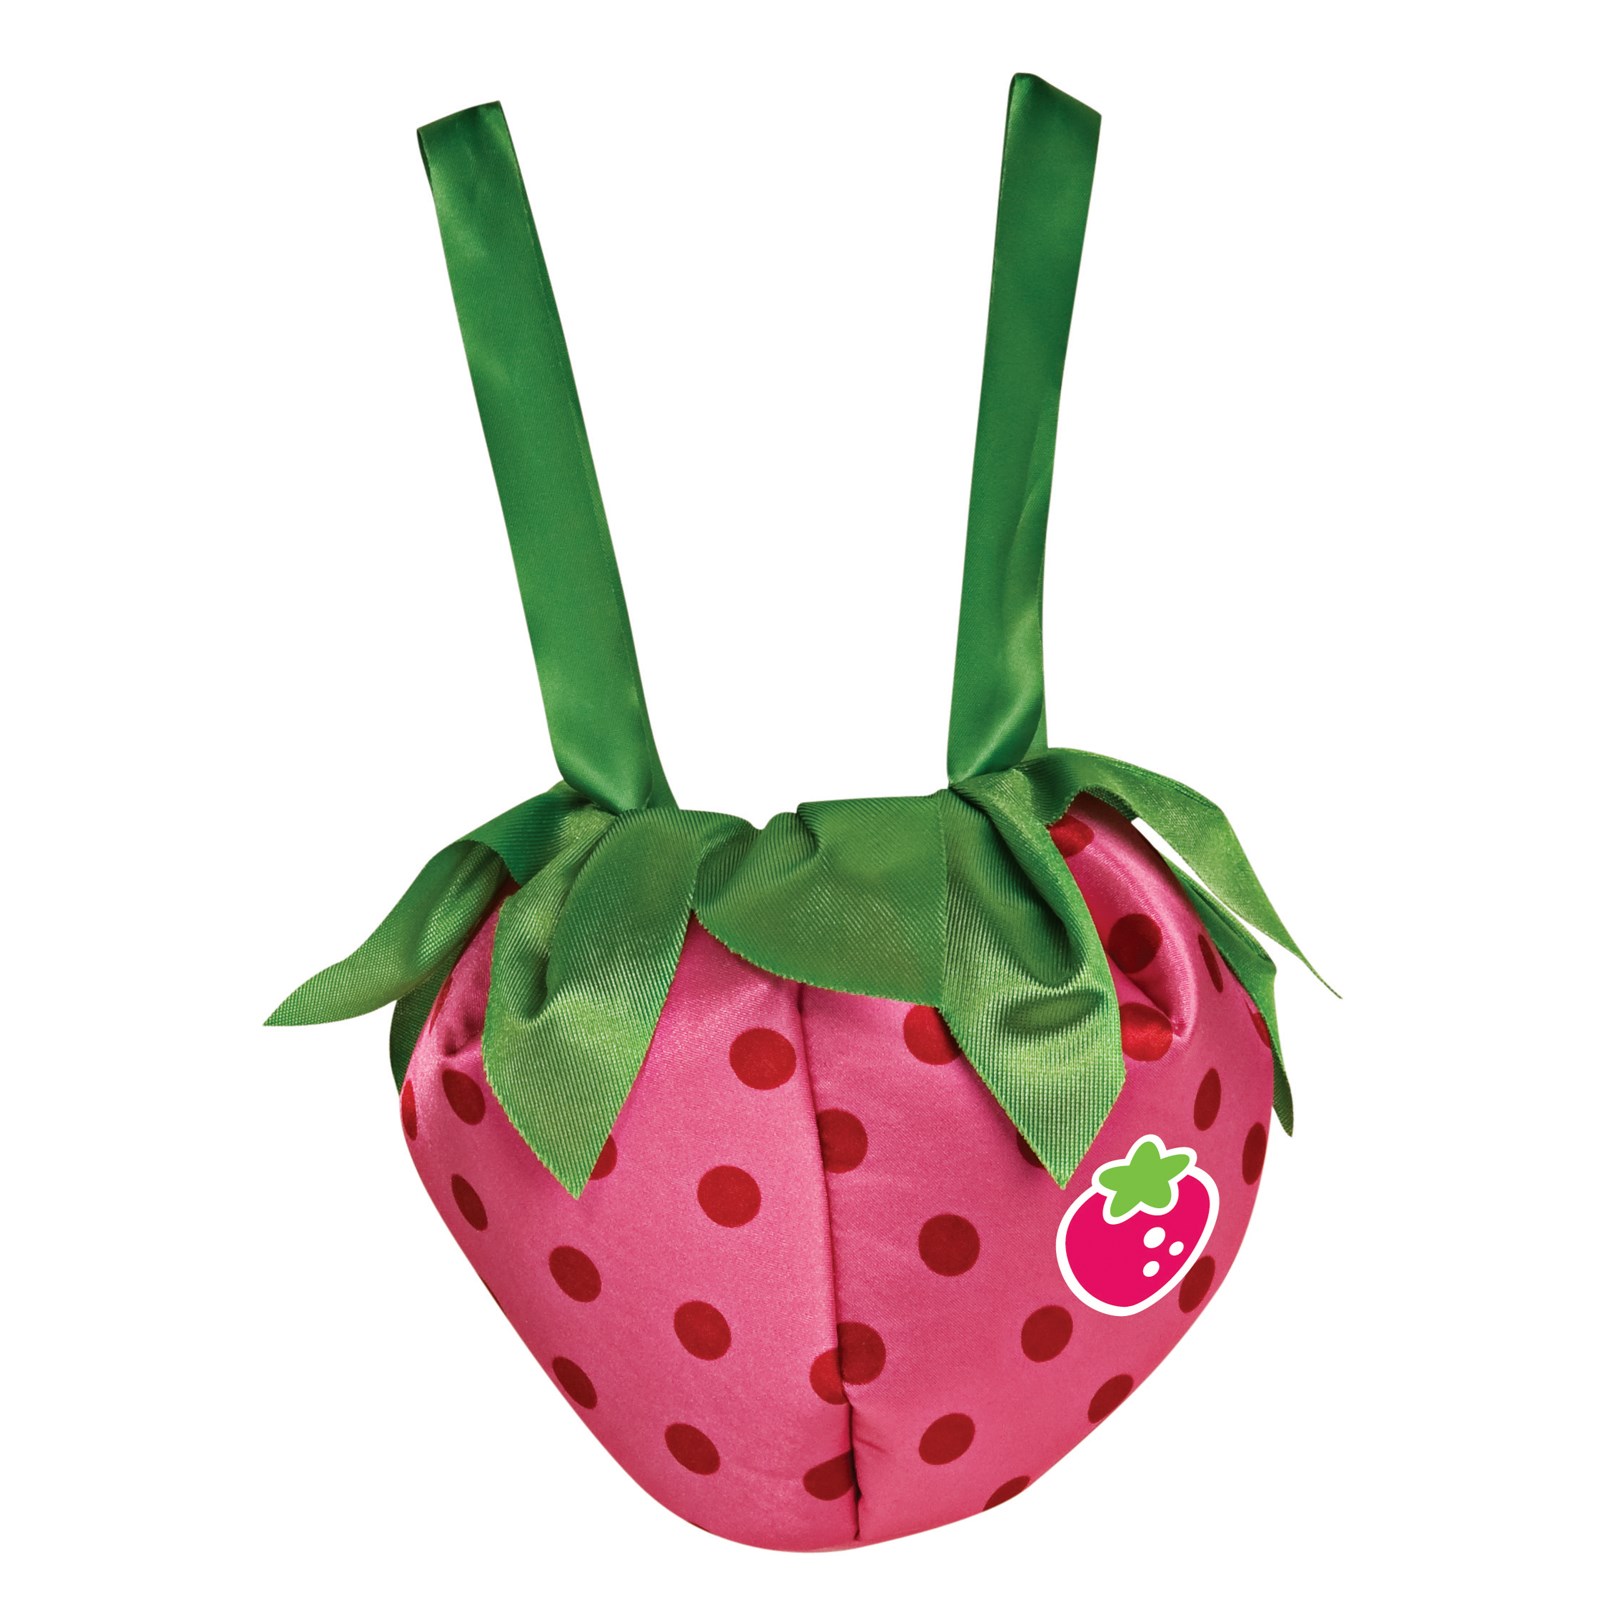 Strawberry Shortcake - Trick or Treat Pail Fabric